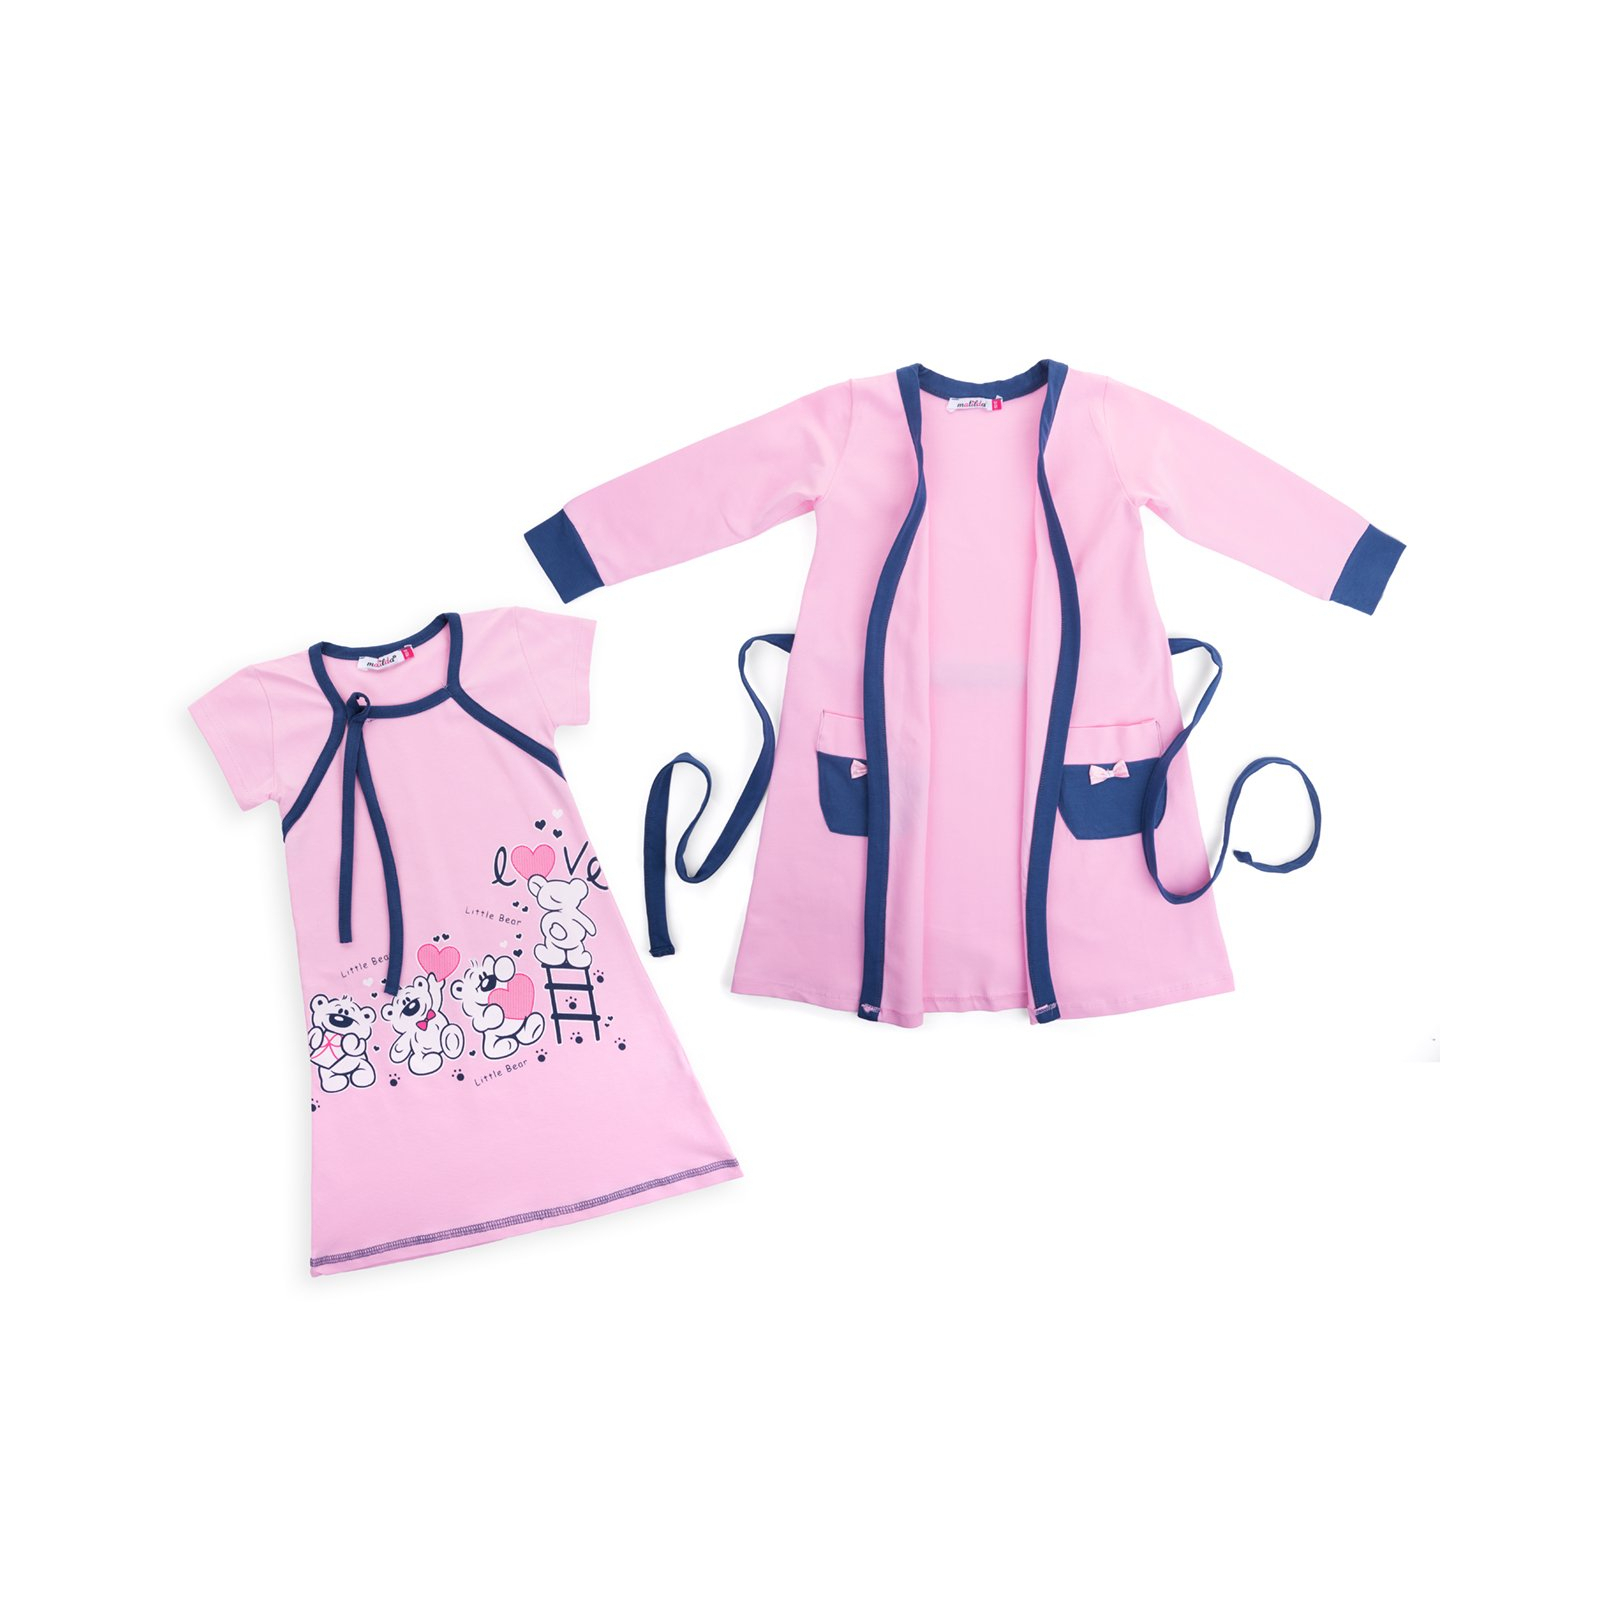 Пижама Matilda и халат с мишками "Love" (7445-140G-pink)